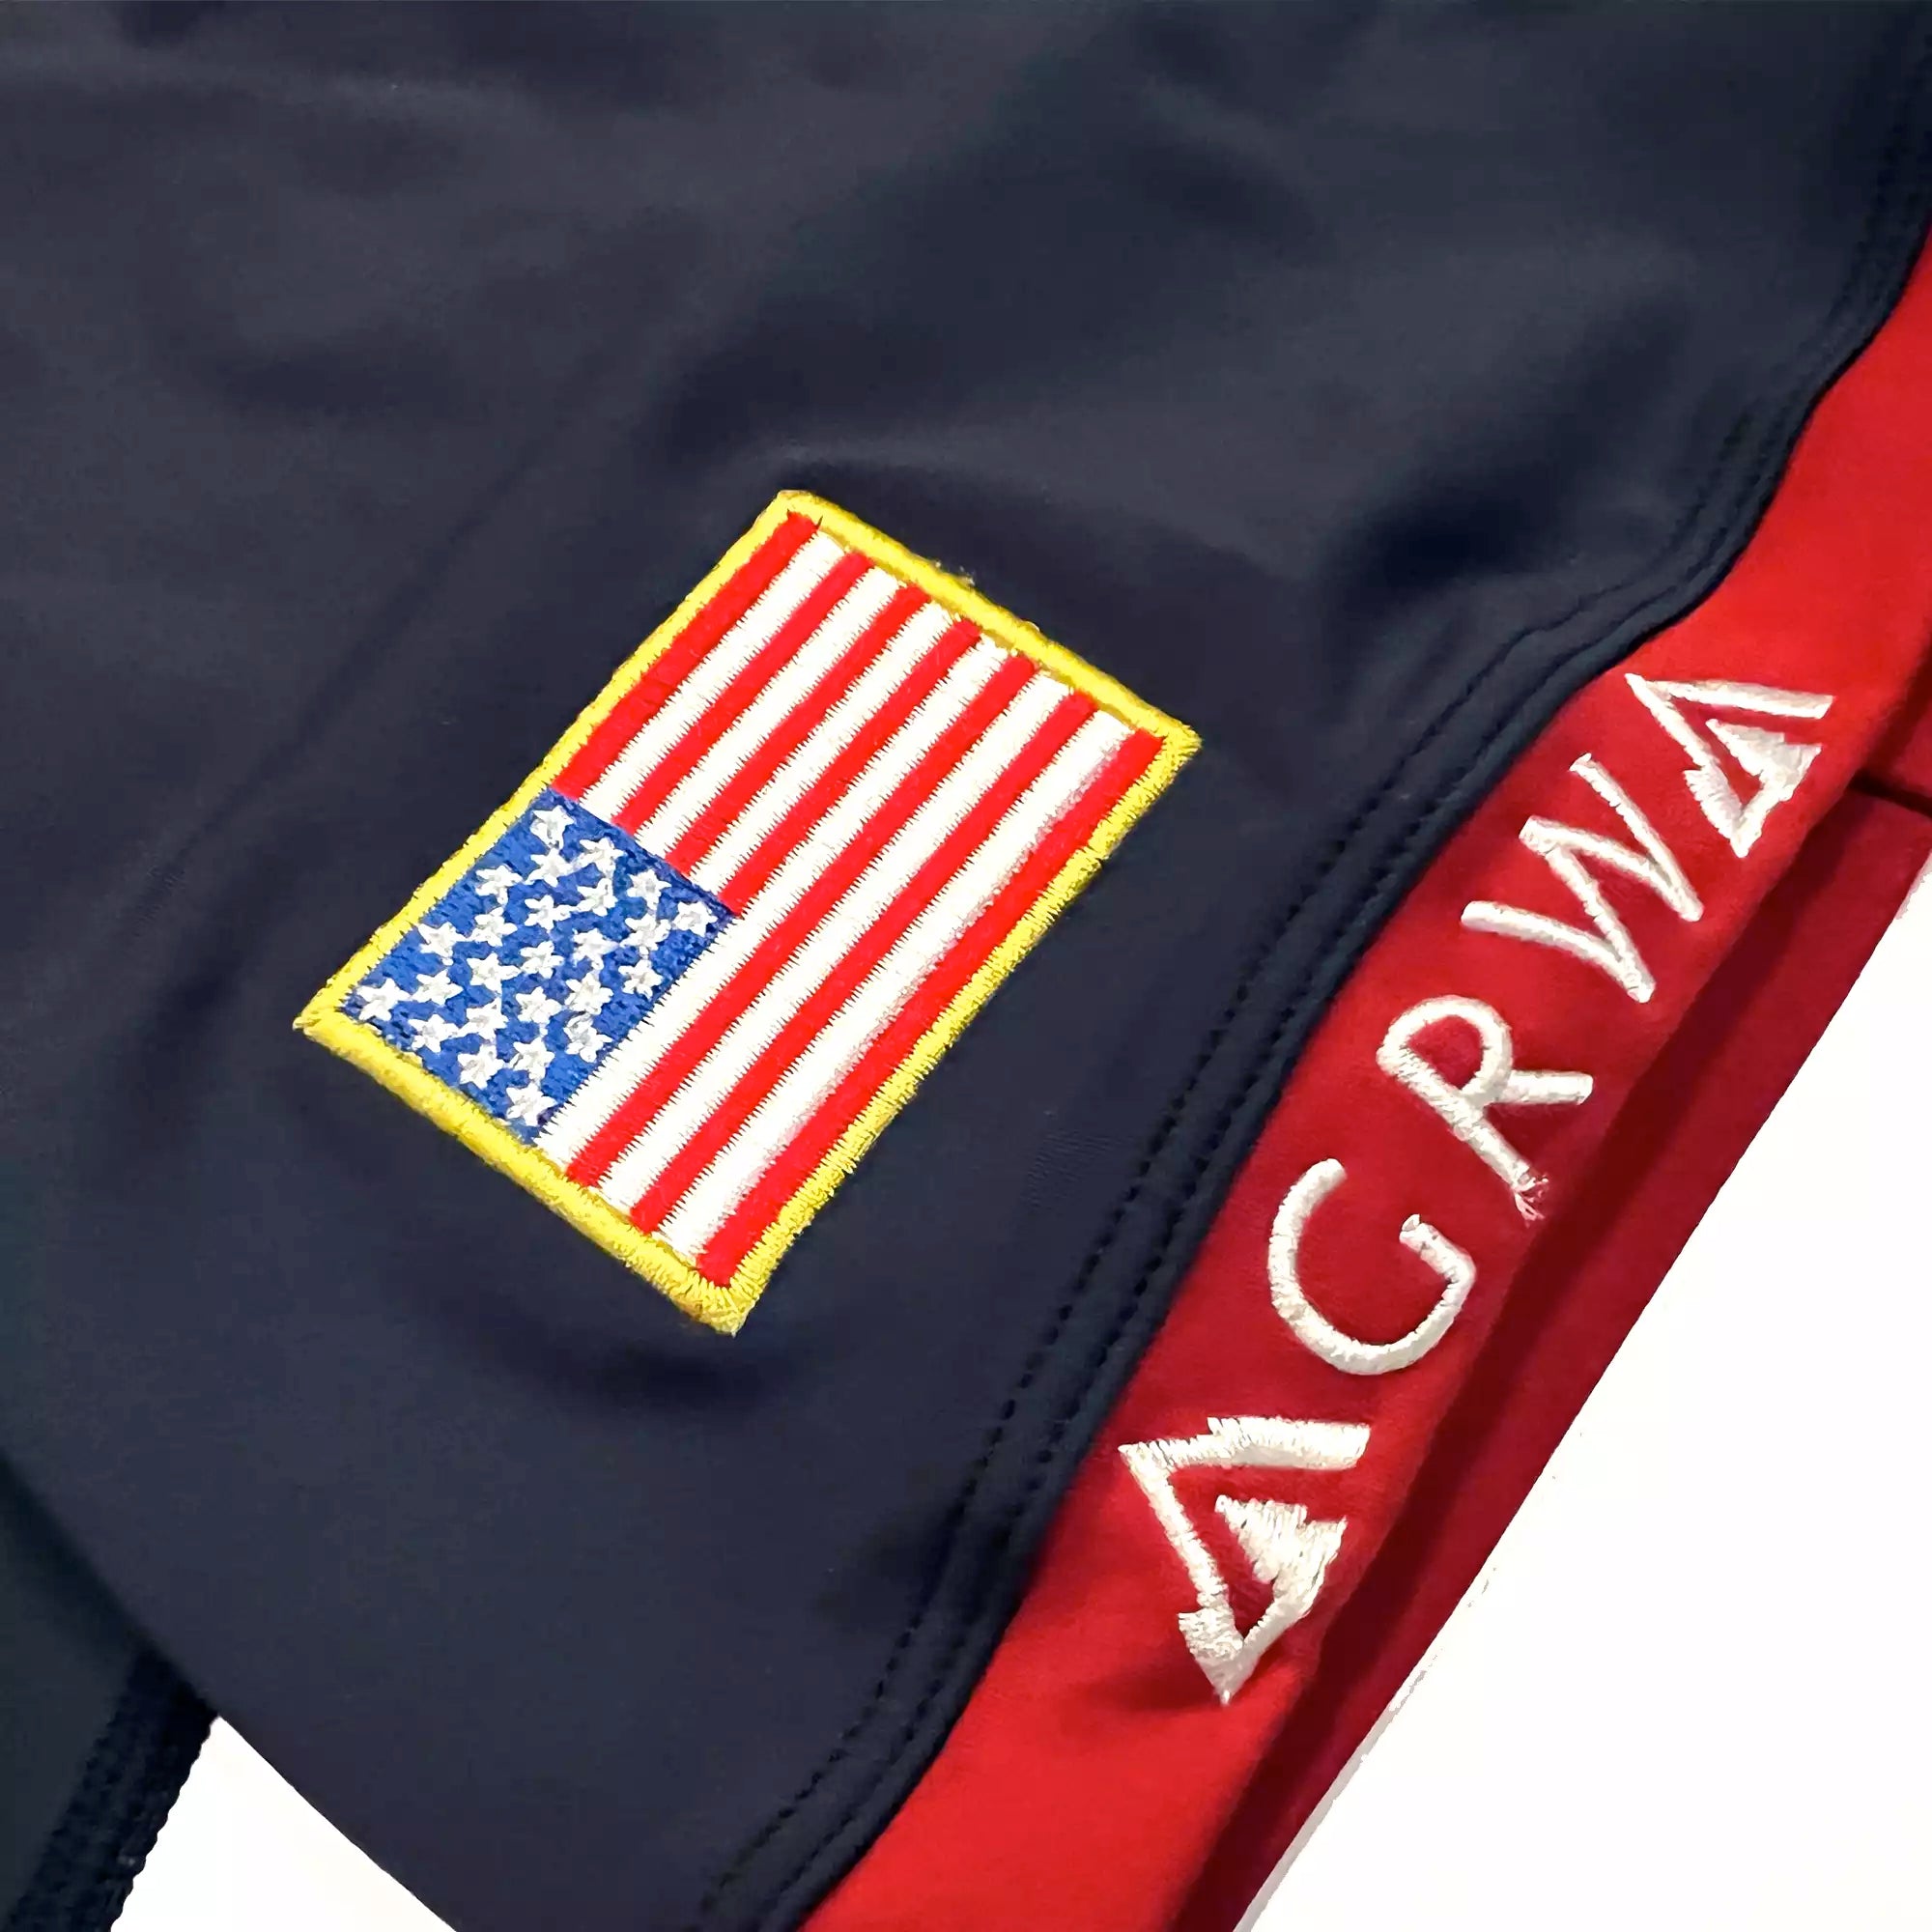 GRW American Jiu Jitsu BJJ Rash Guard patches red white blue american flag patch embroidery closeup sleeve cuff